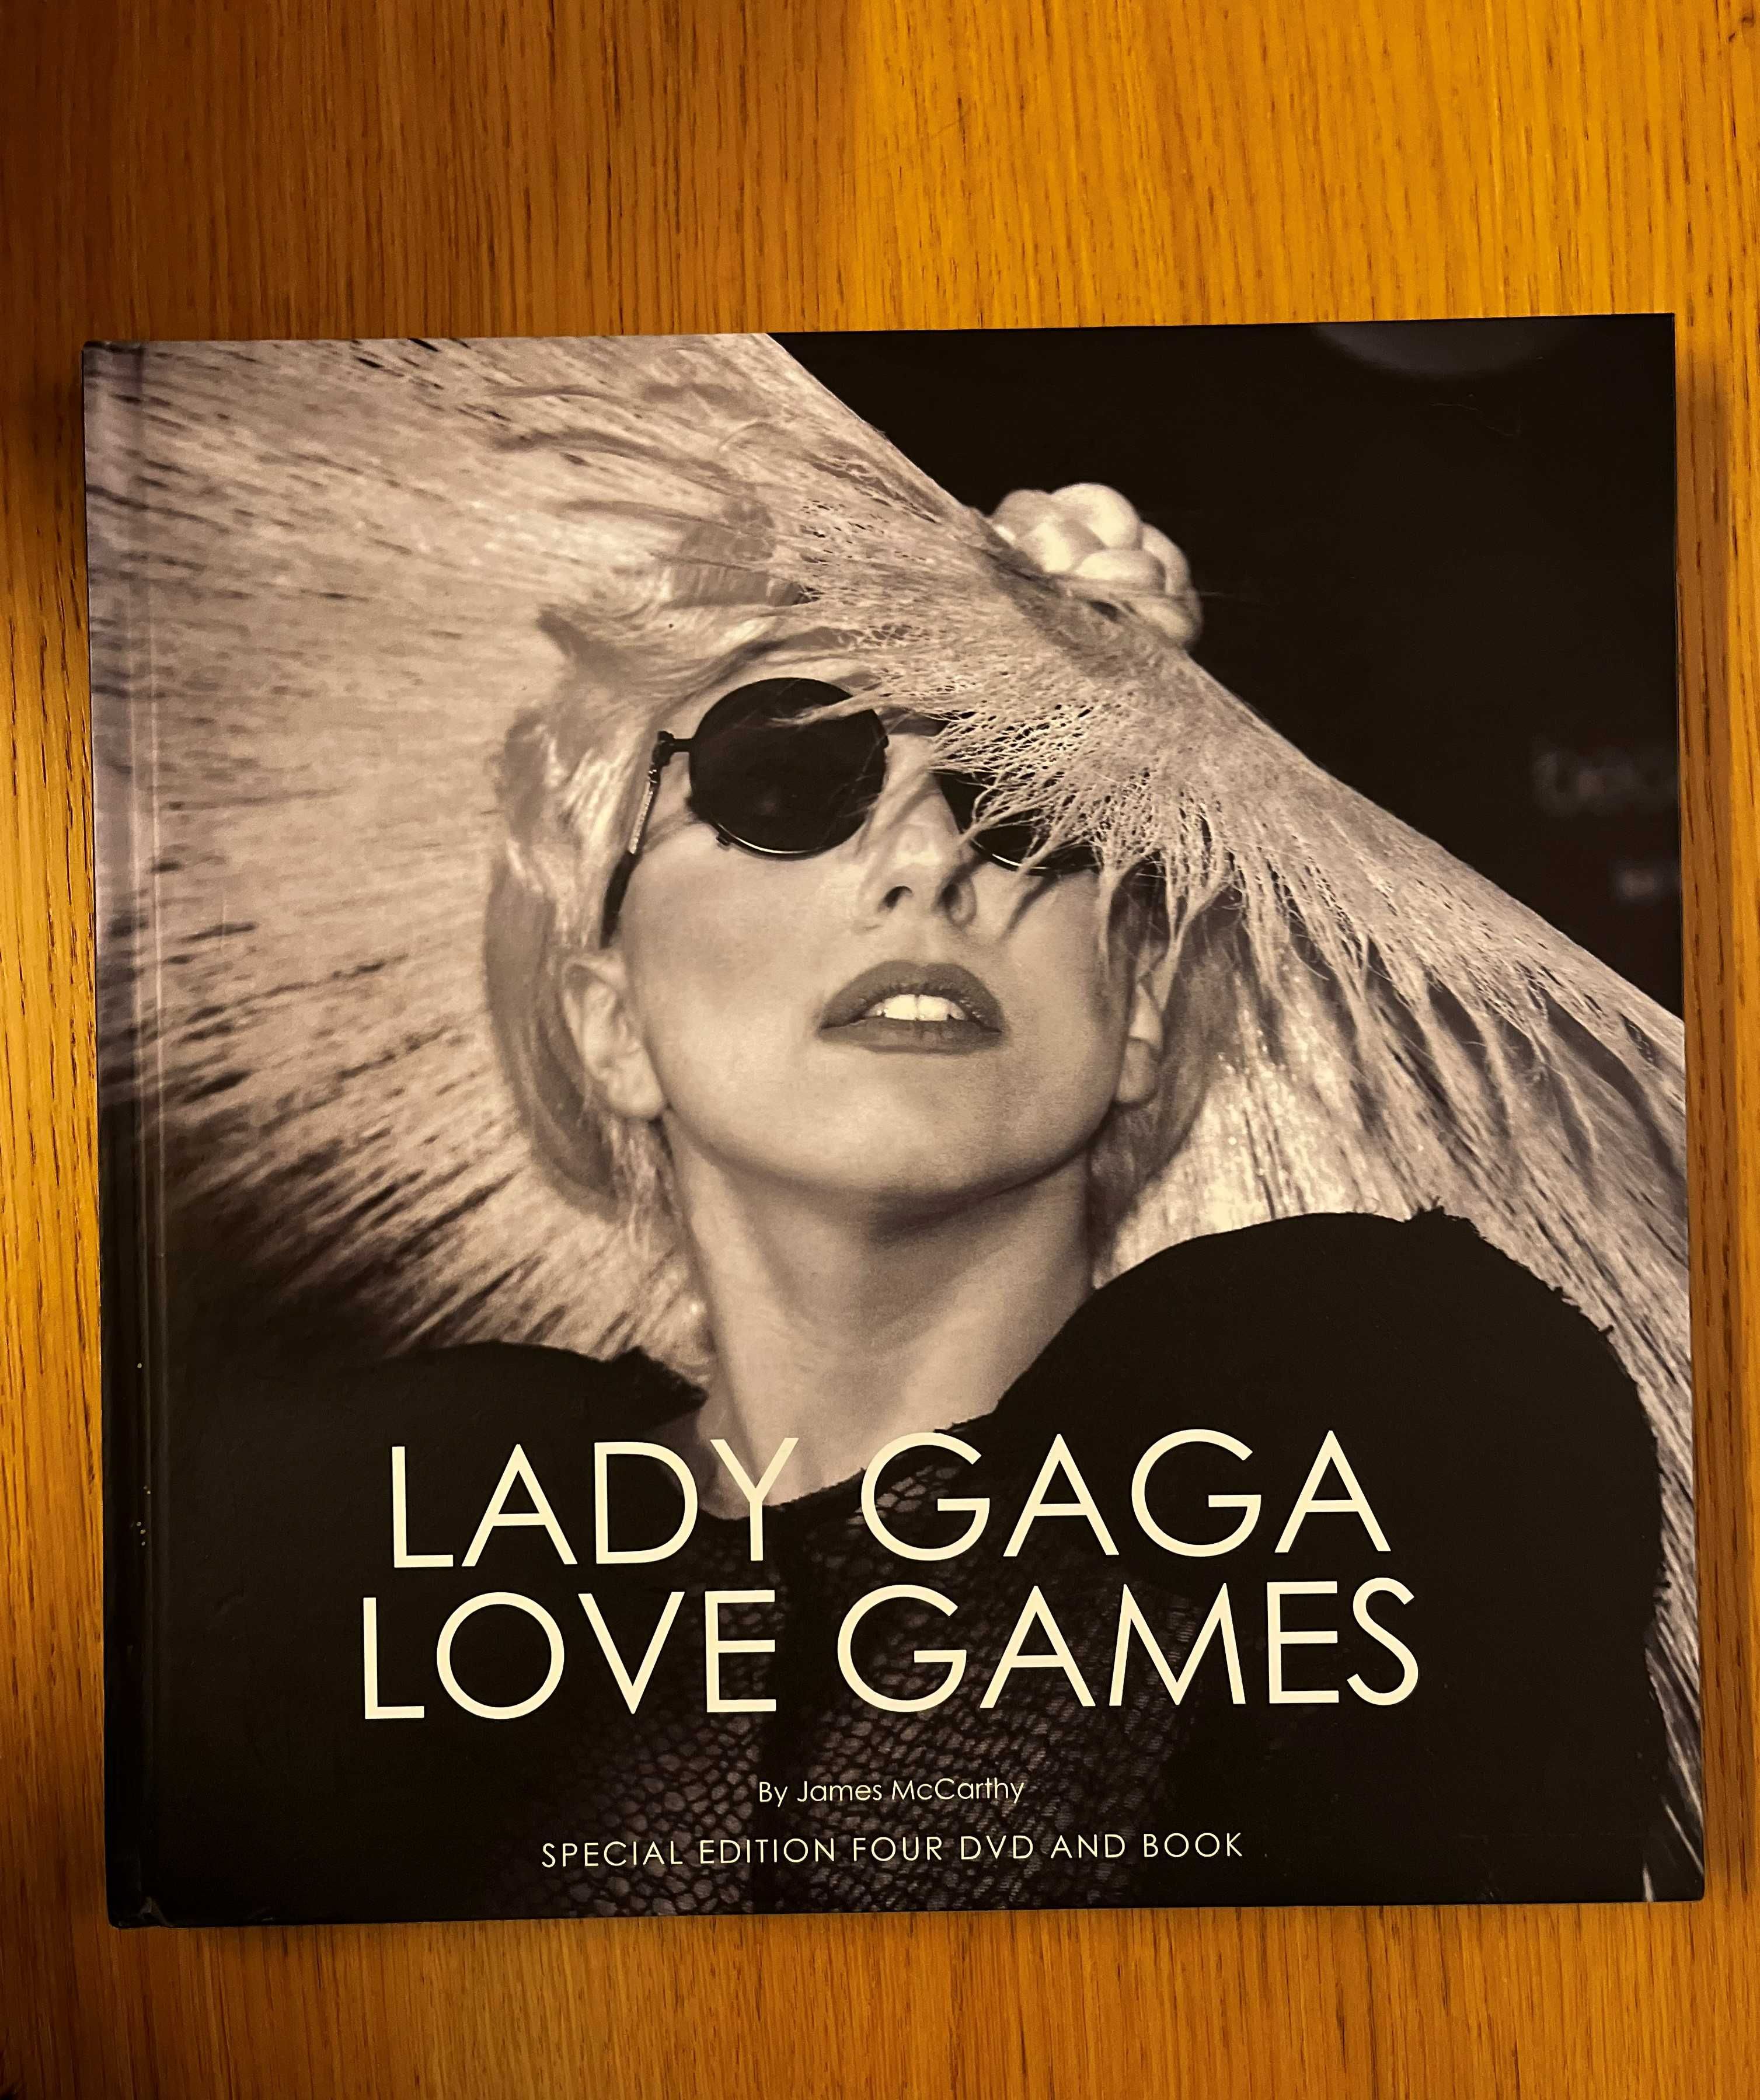 Livro “Lady Gaga - Love Games”